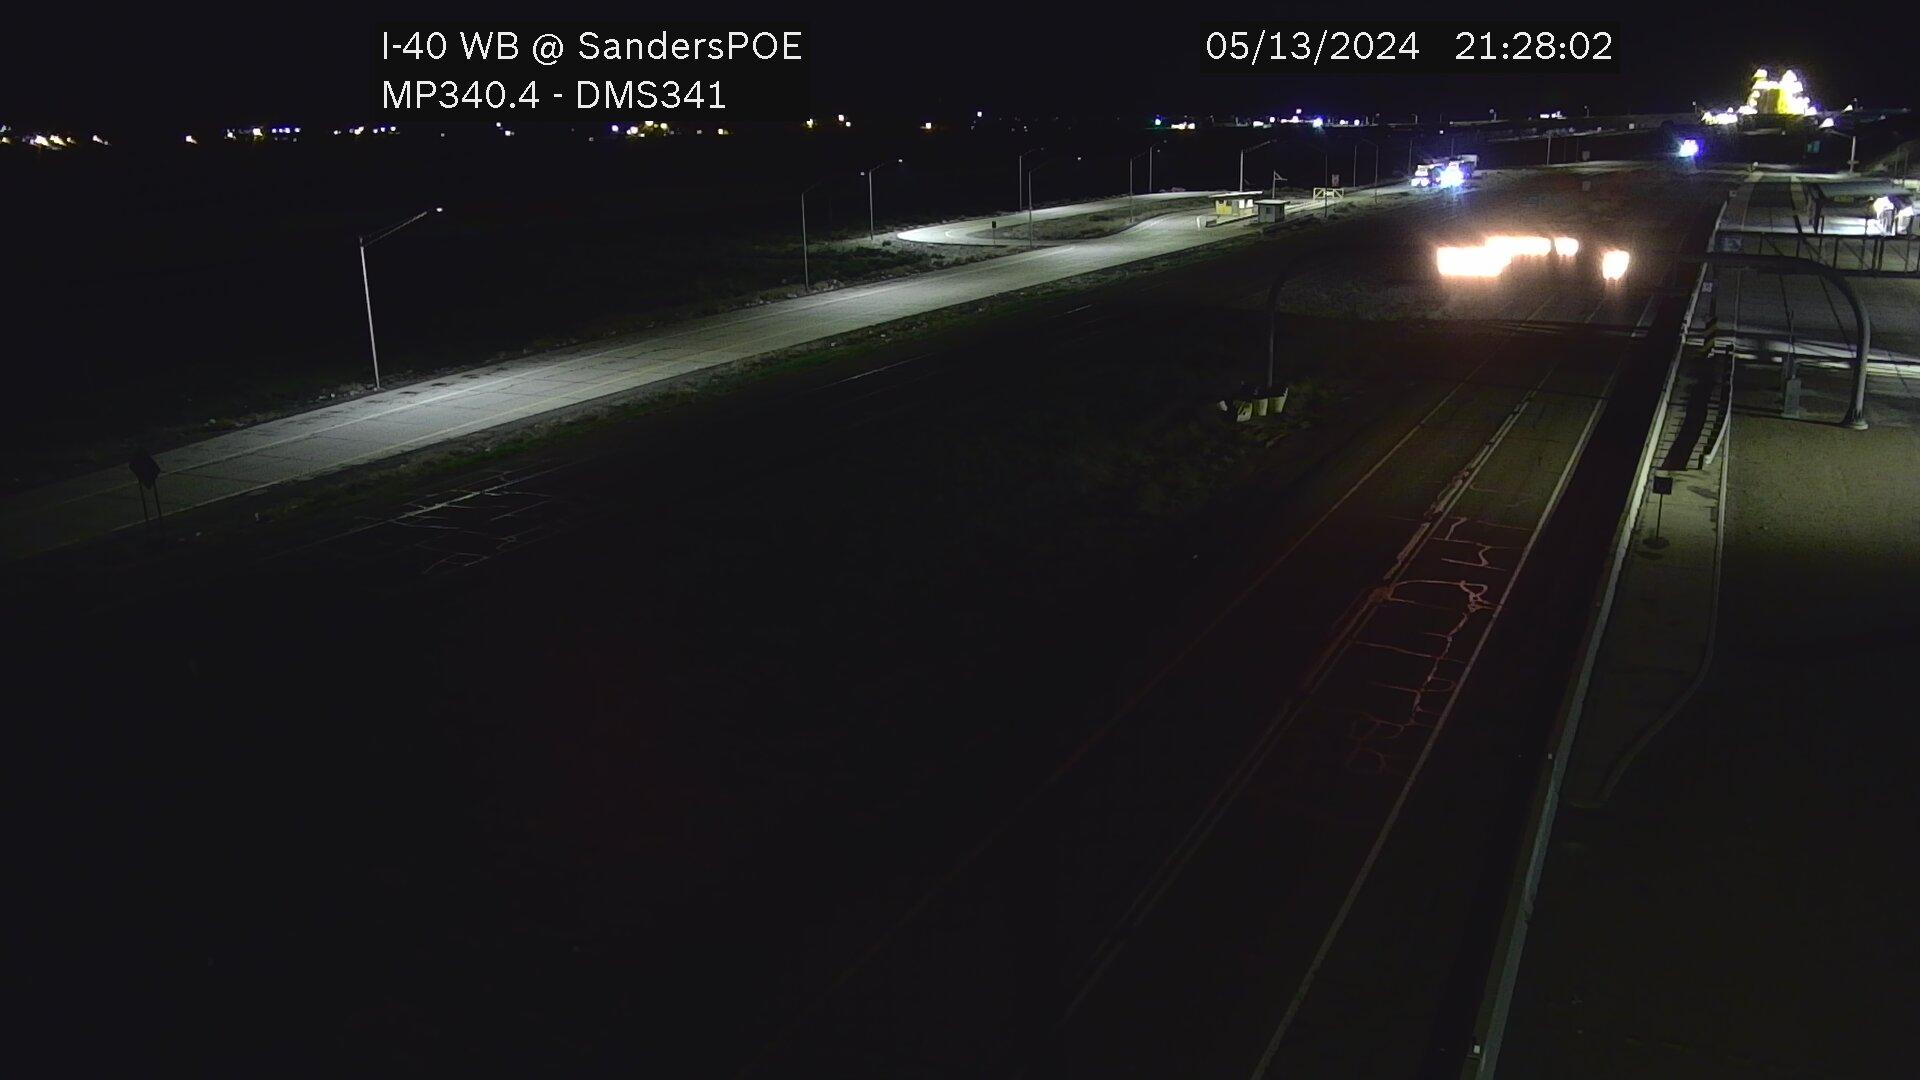 Sanders › West: I-40 WB 340.44 @SandersPOE Traffic Camera